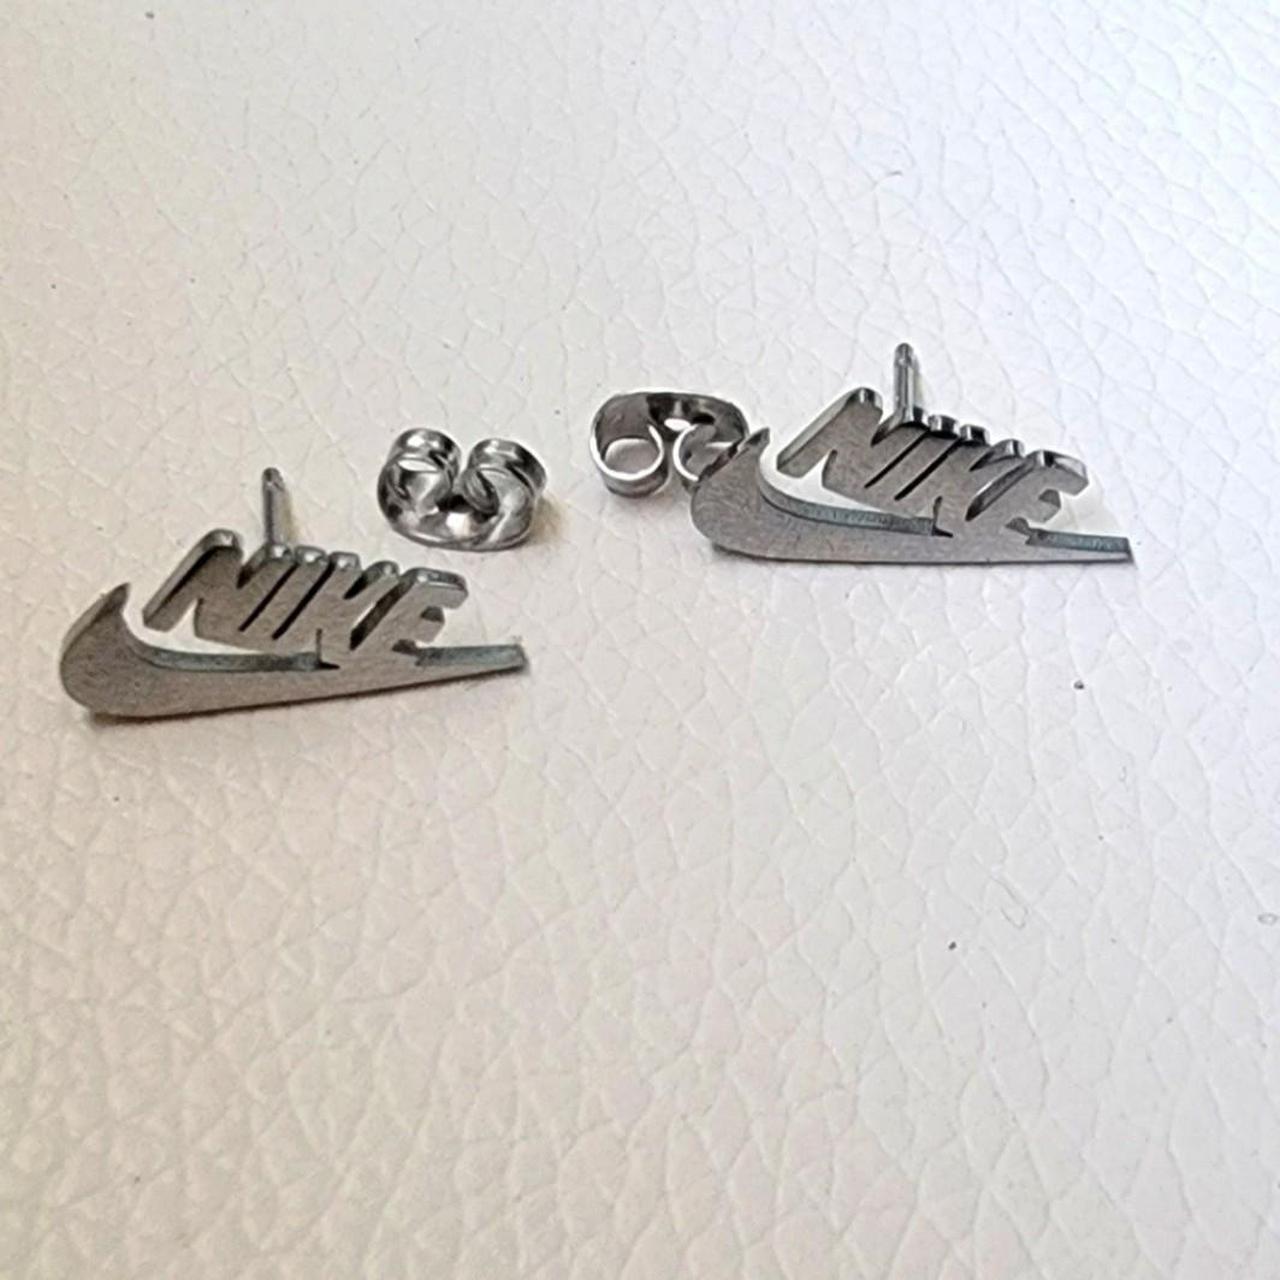 Brand New pair Nike Swoosh earrings. Gorgeous